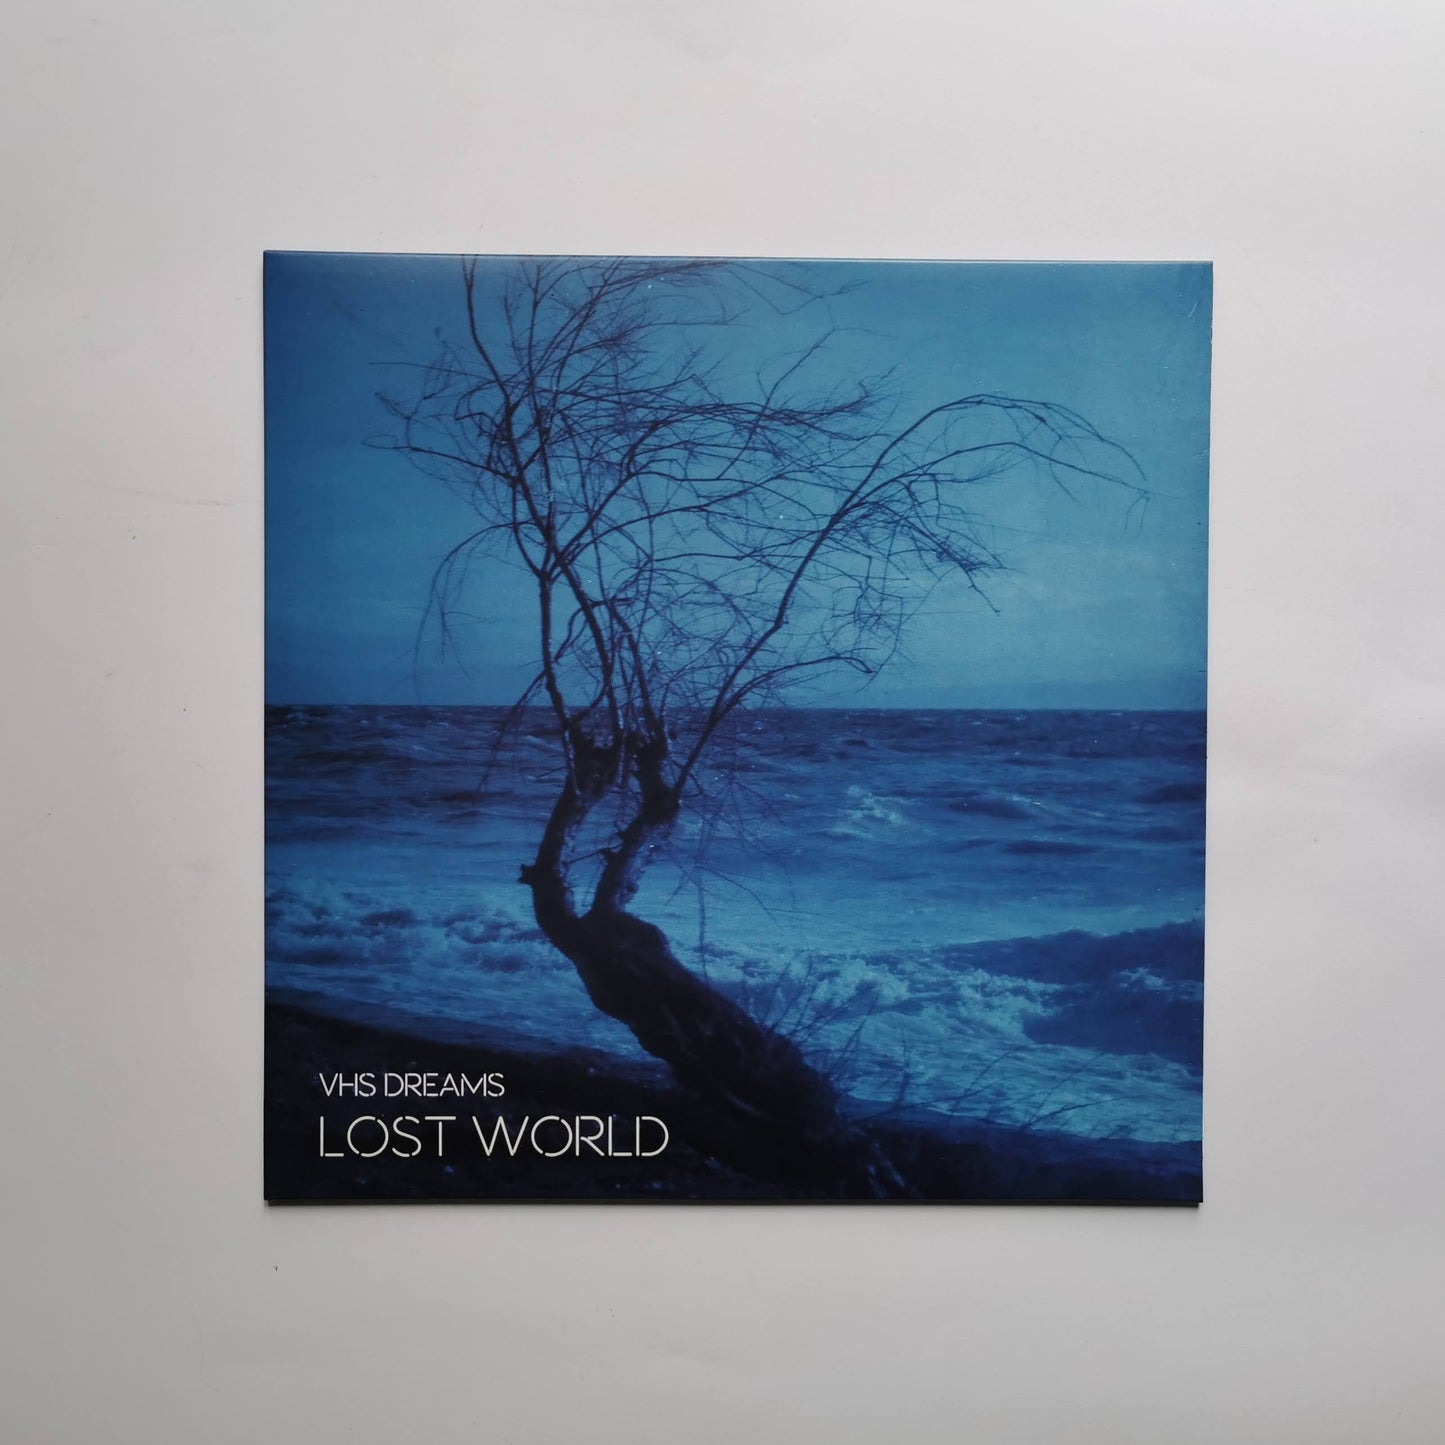 "Lost World" Vinyl - Blue Colored Edition